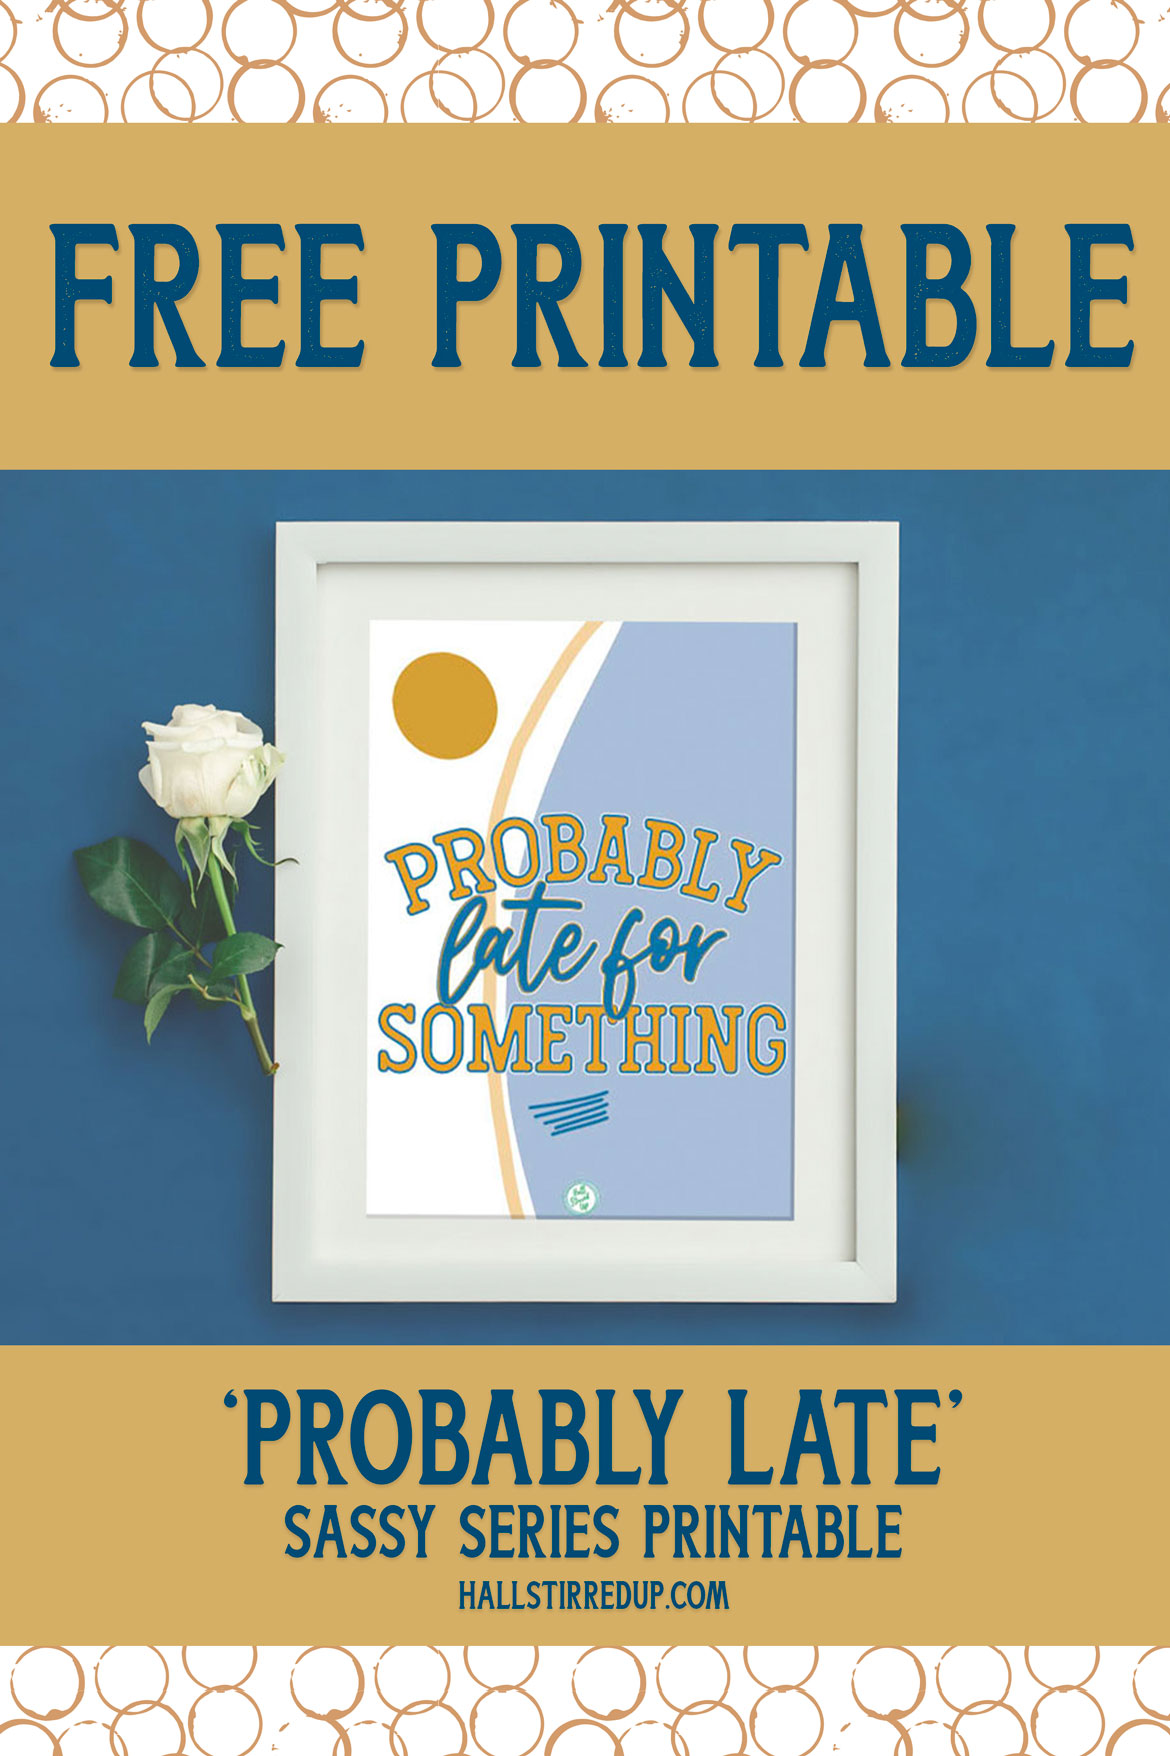 Late for something - free Sassy Series printable